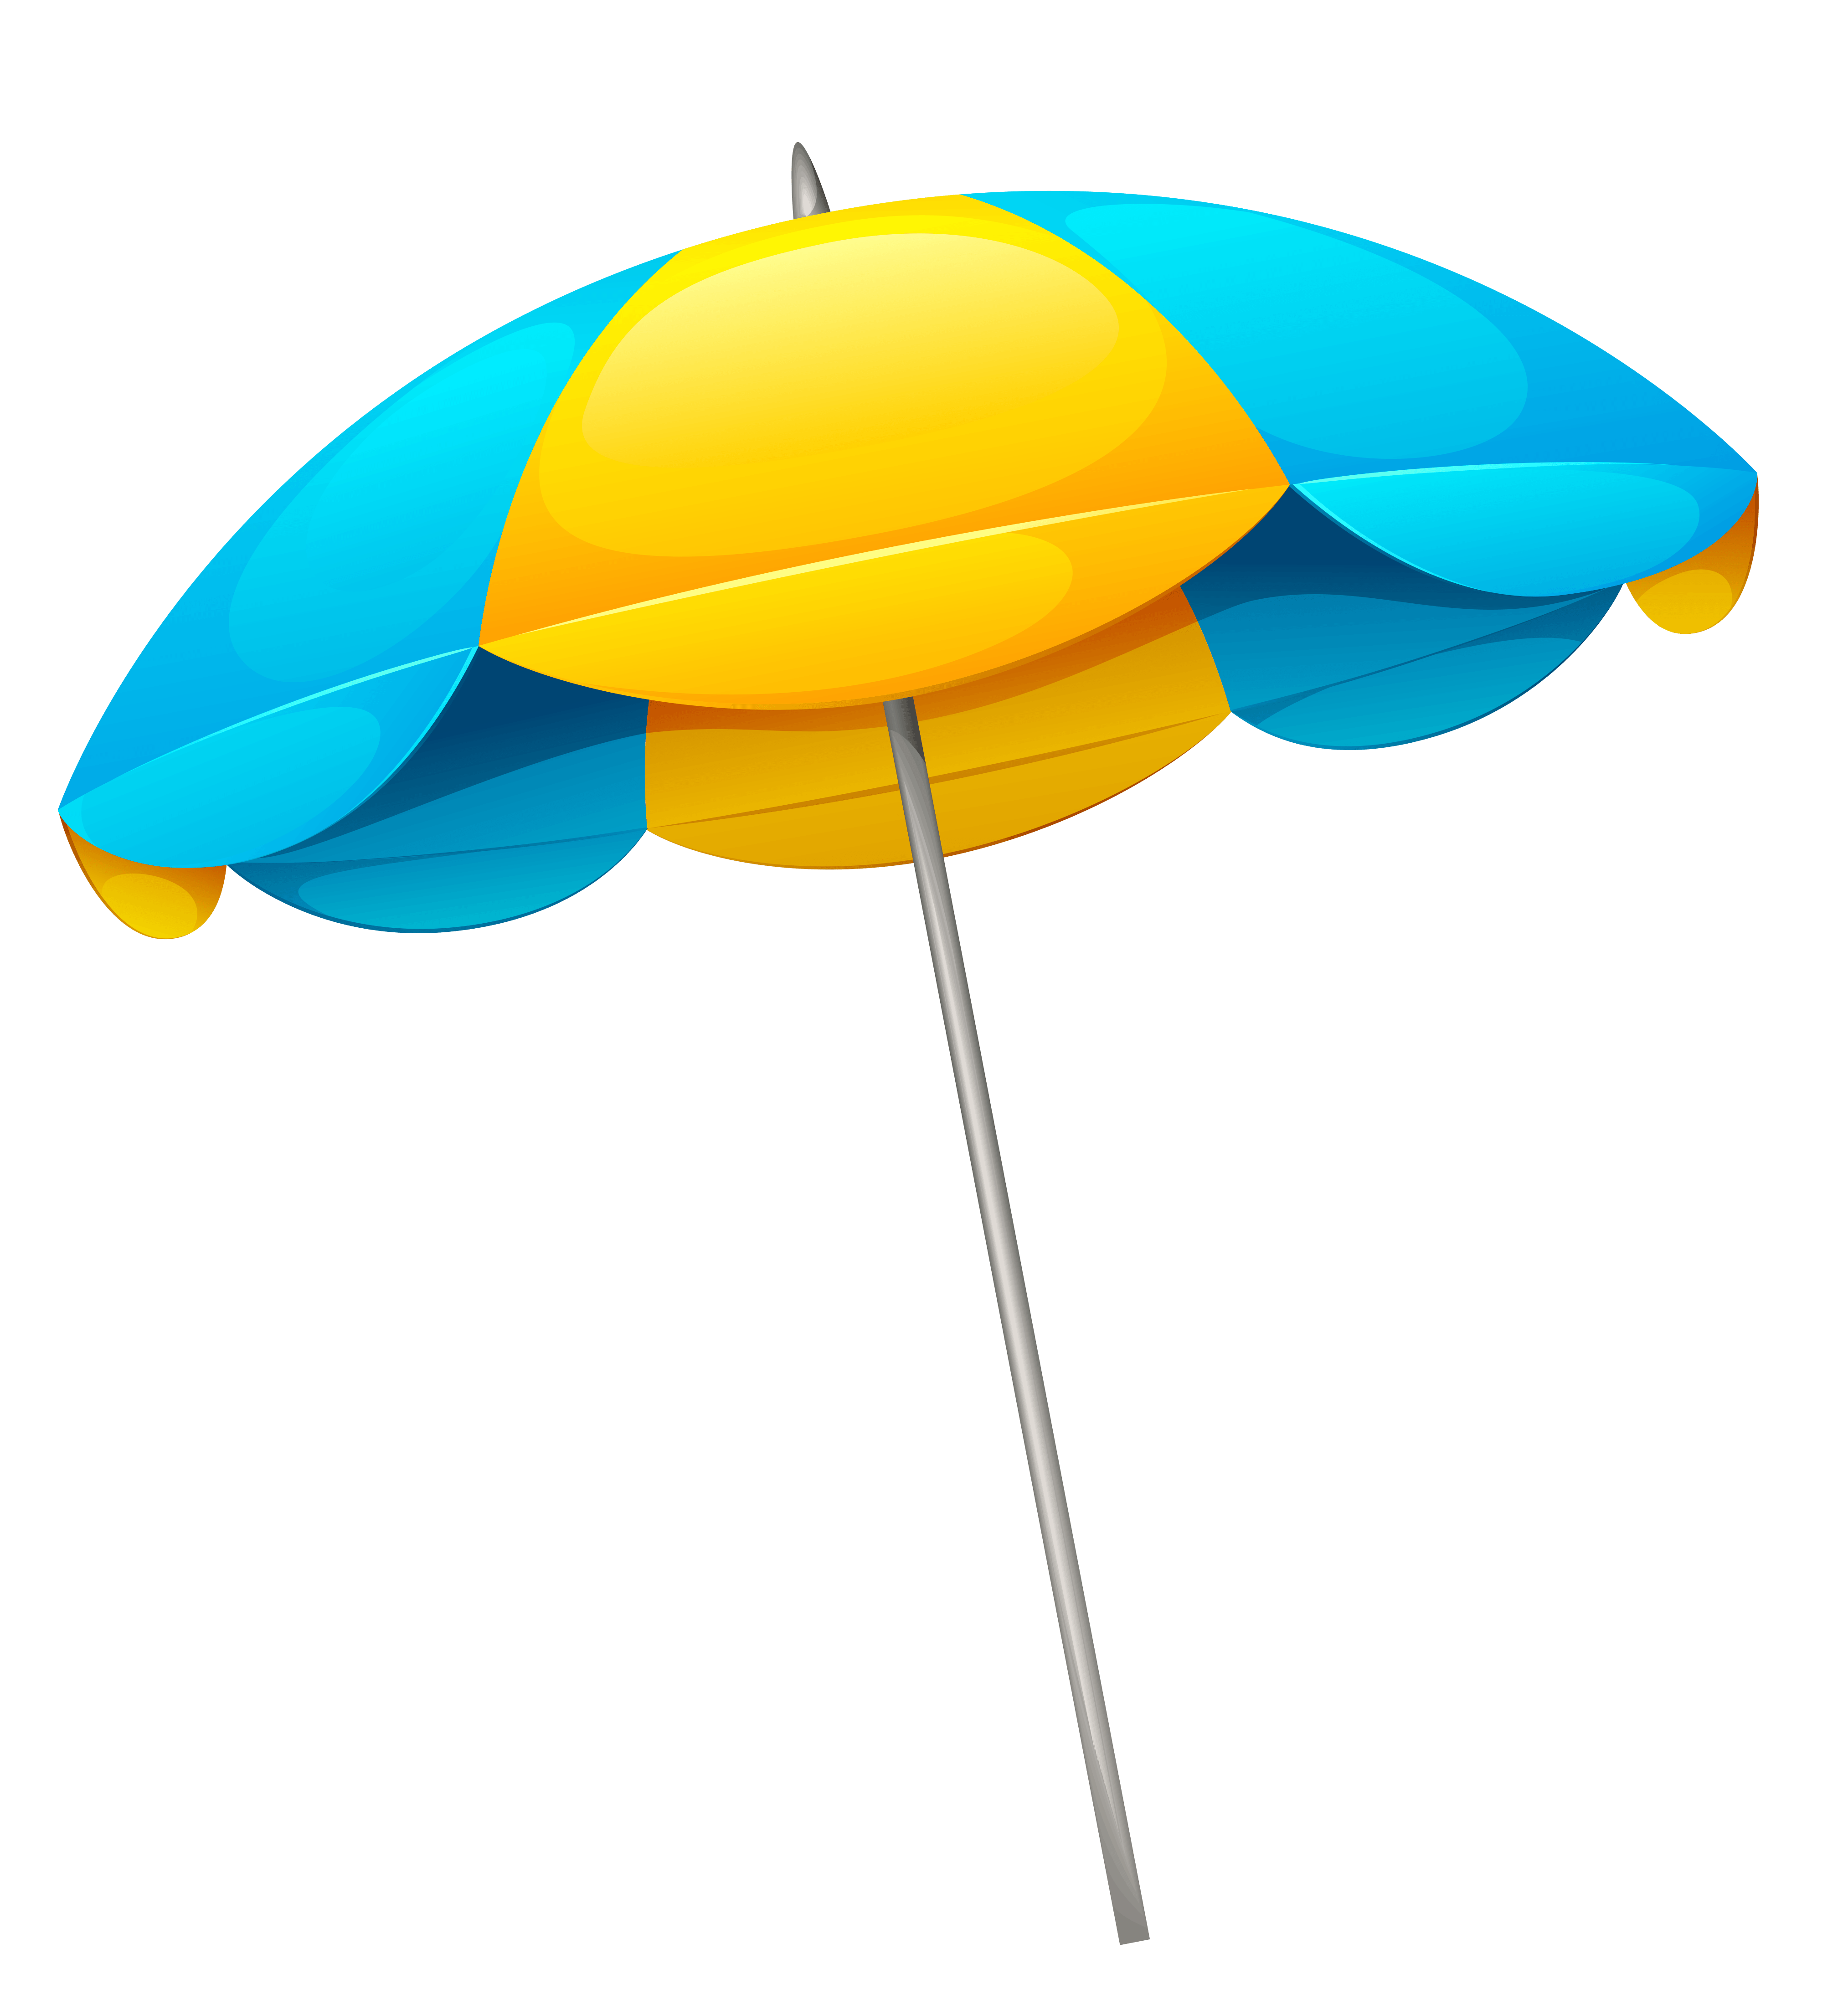 Umbrella Vector Logo - Beach Umbrella Vector at GetDrawings.com | Free for personal use ...